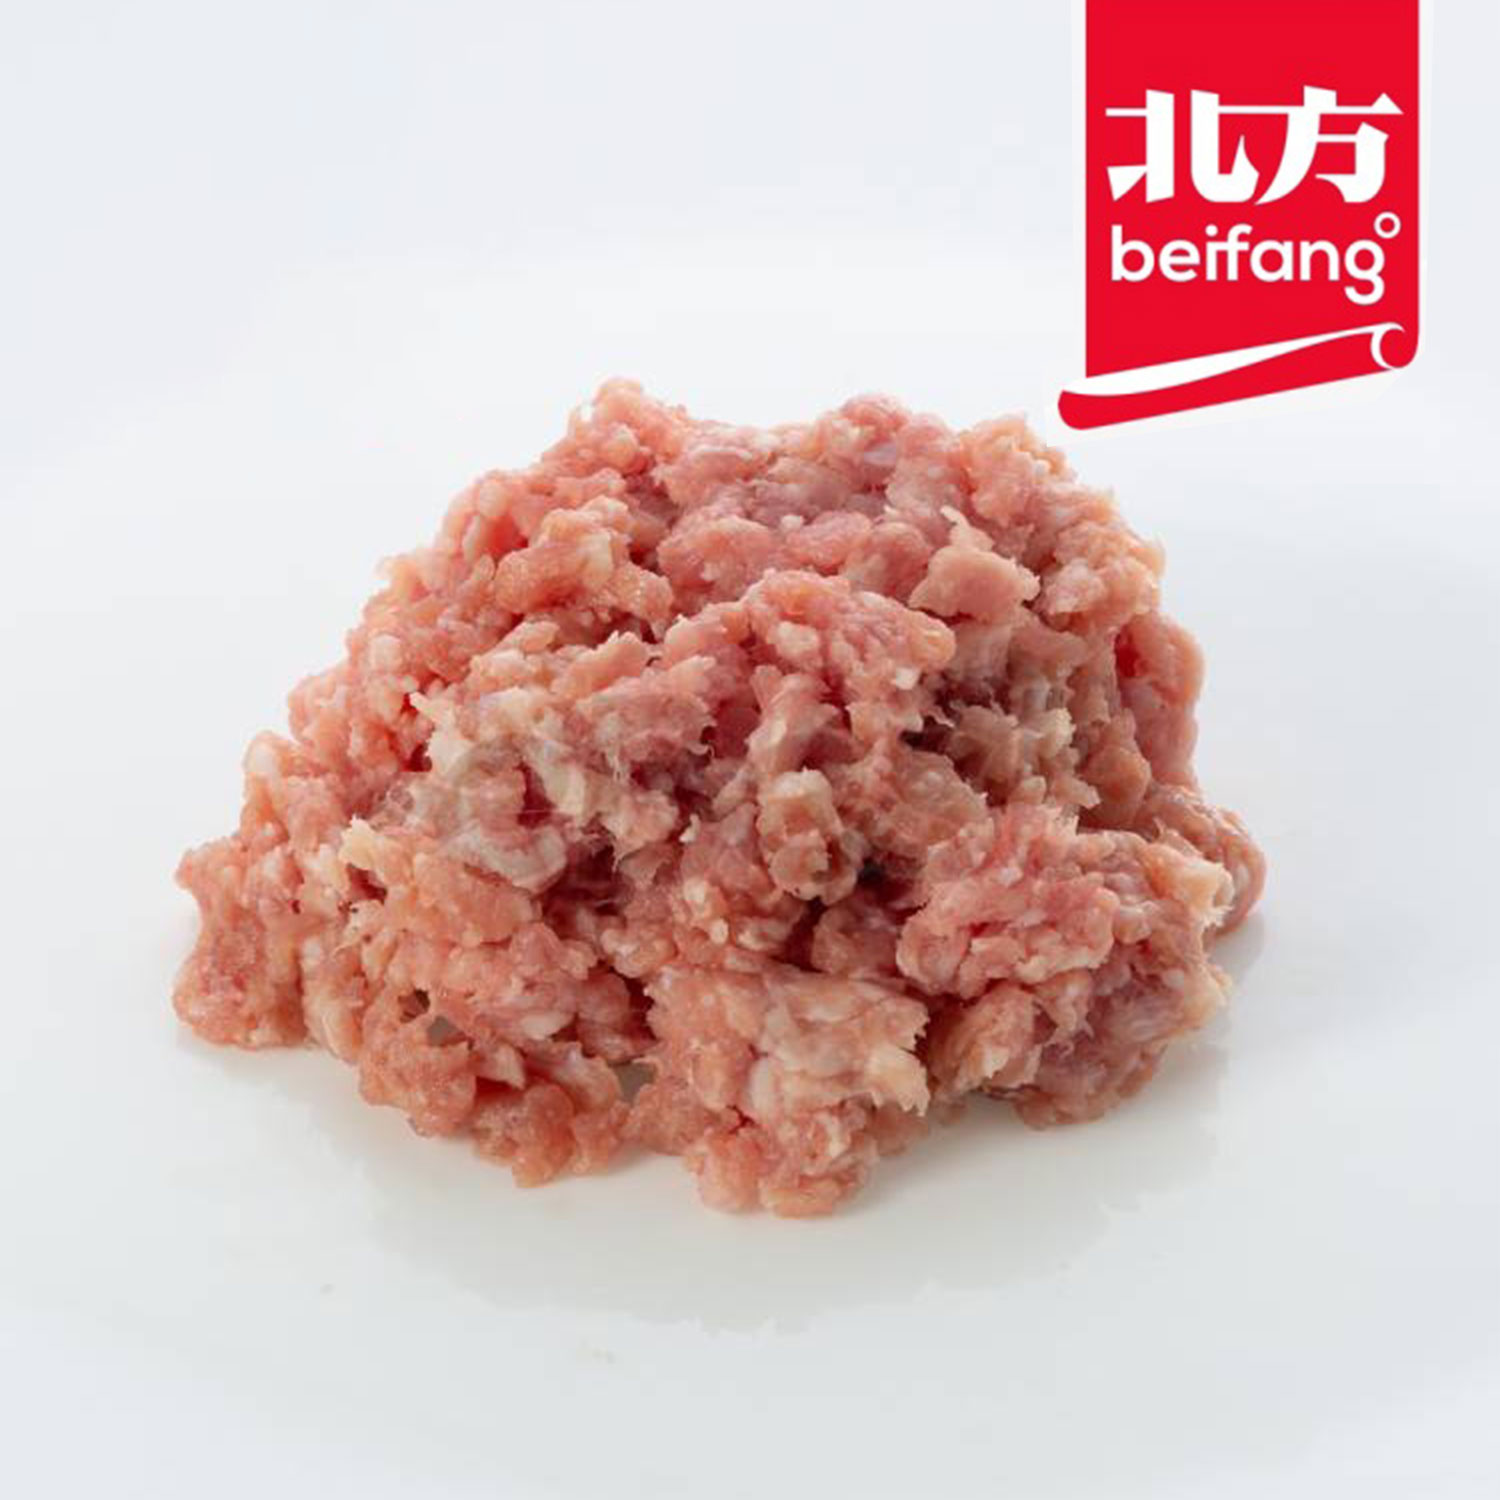 Beifang Pork Mince Fat Ratio/Lean (25%:75%) 500g-eBest-Pork,Meat deli & eggs